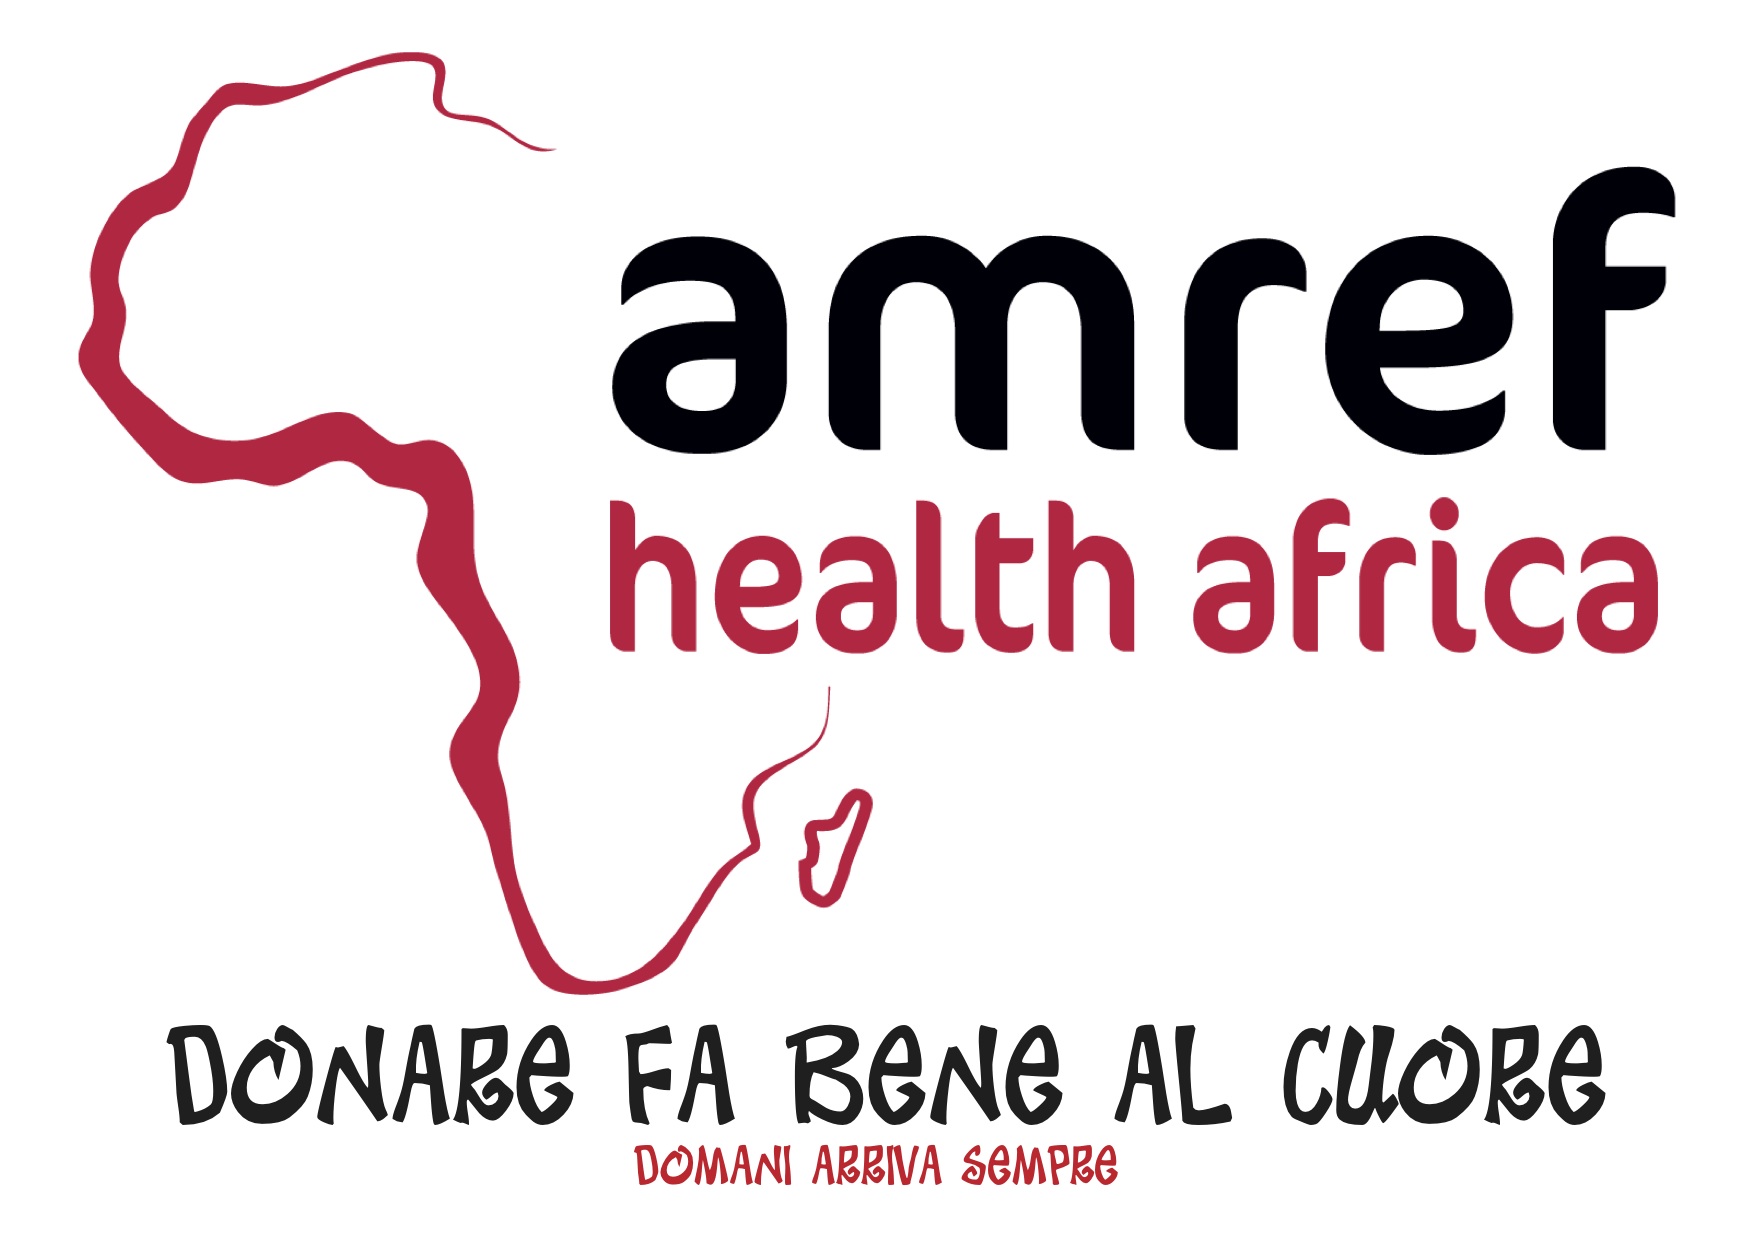 amref health africa